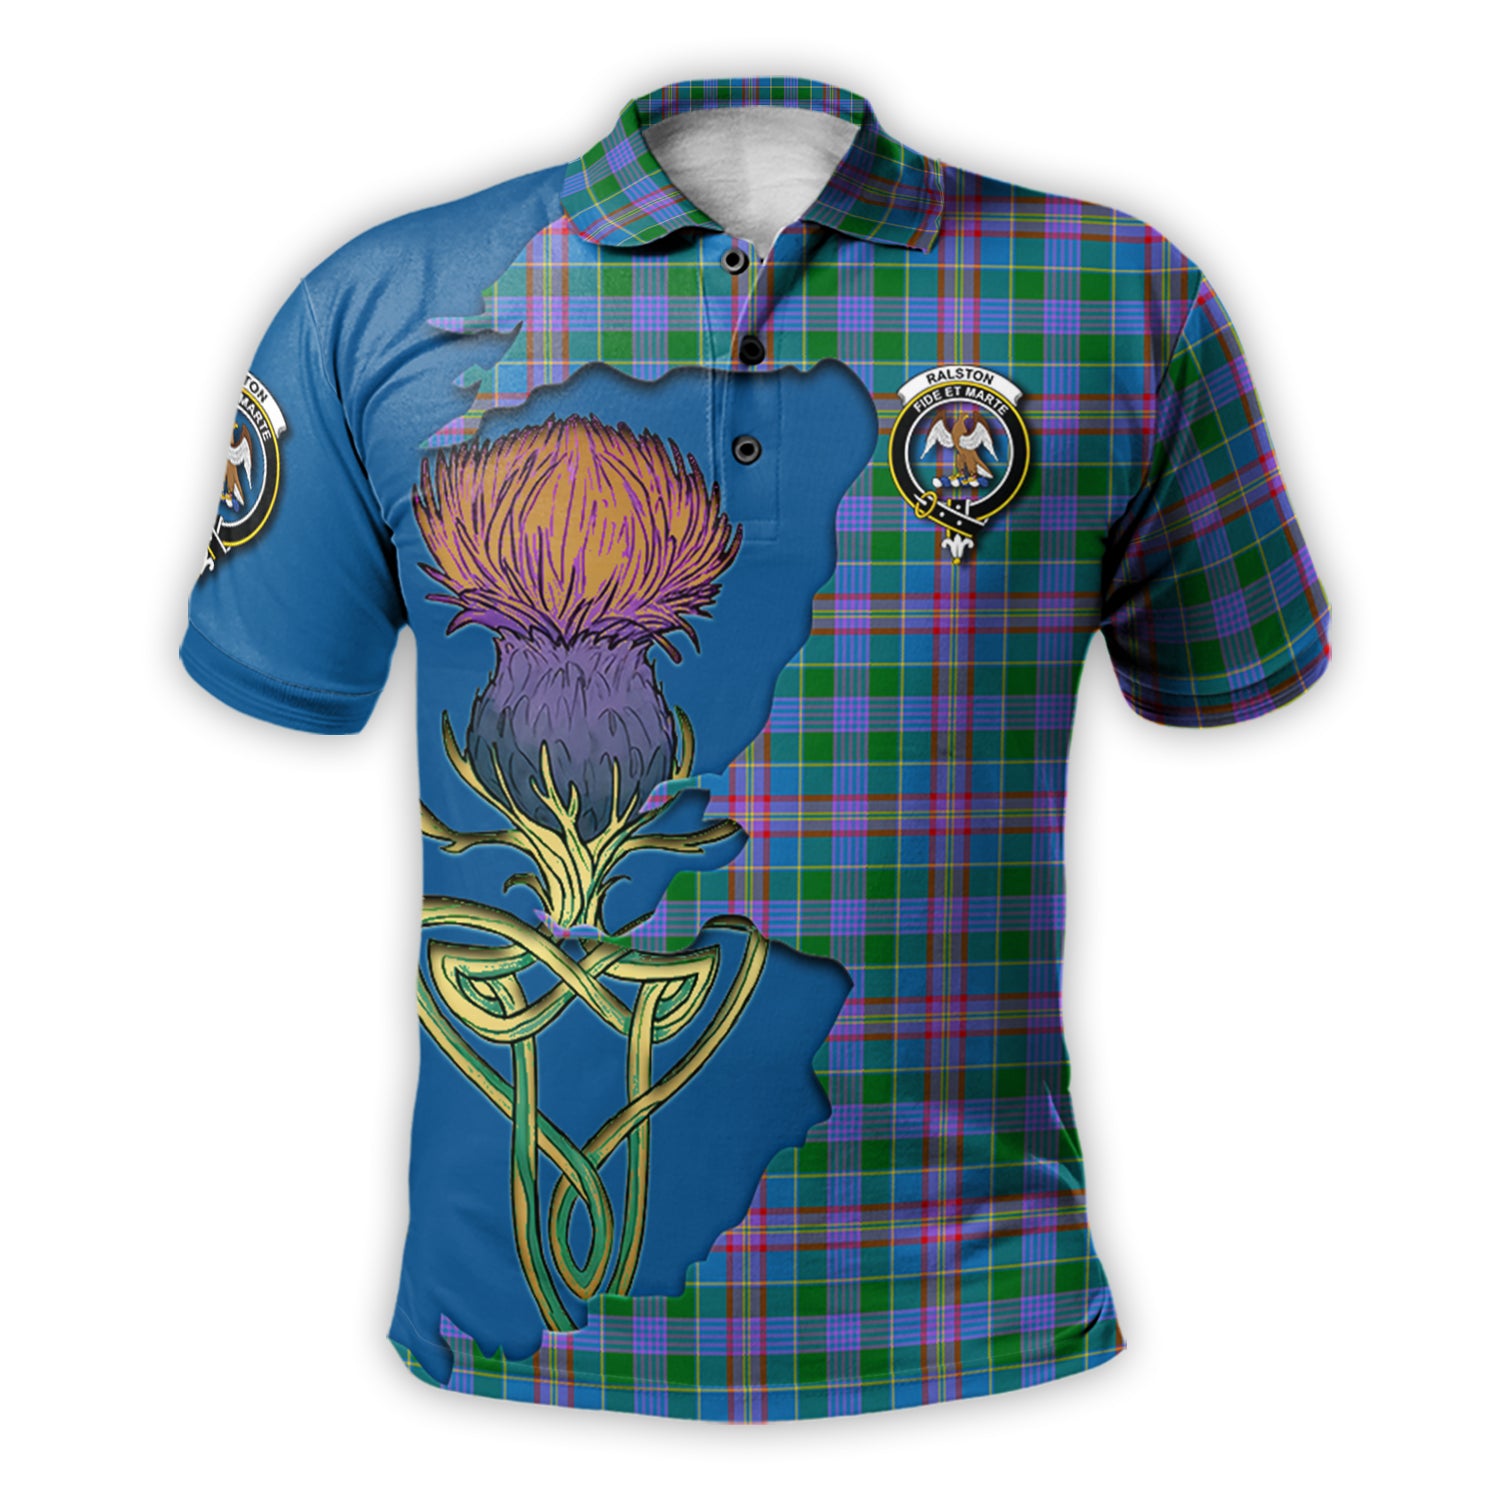 ralston-tartan-family-crest-polo-shirt-tartan-plaid-with-thistle-and-scotland-map-polo-shirt